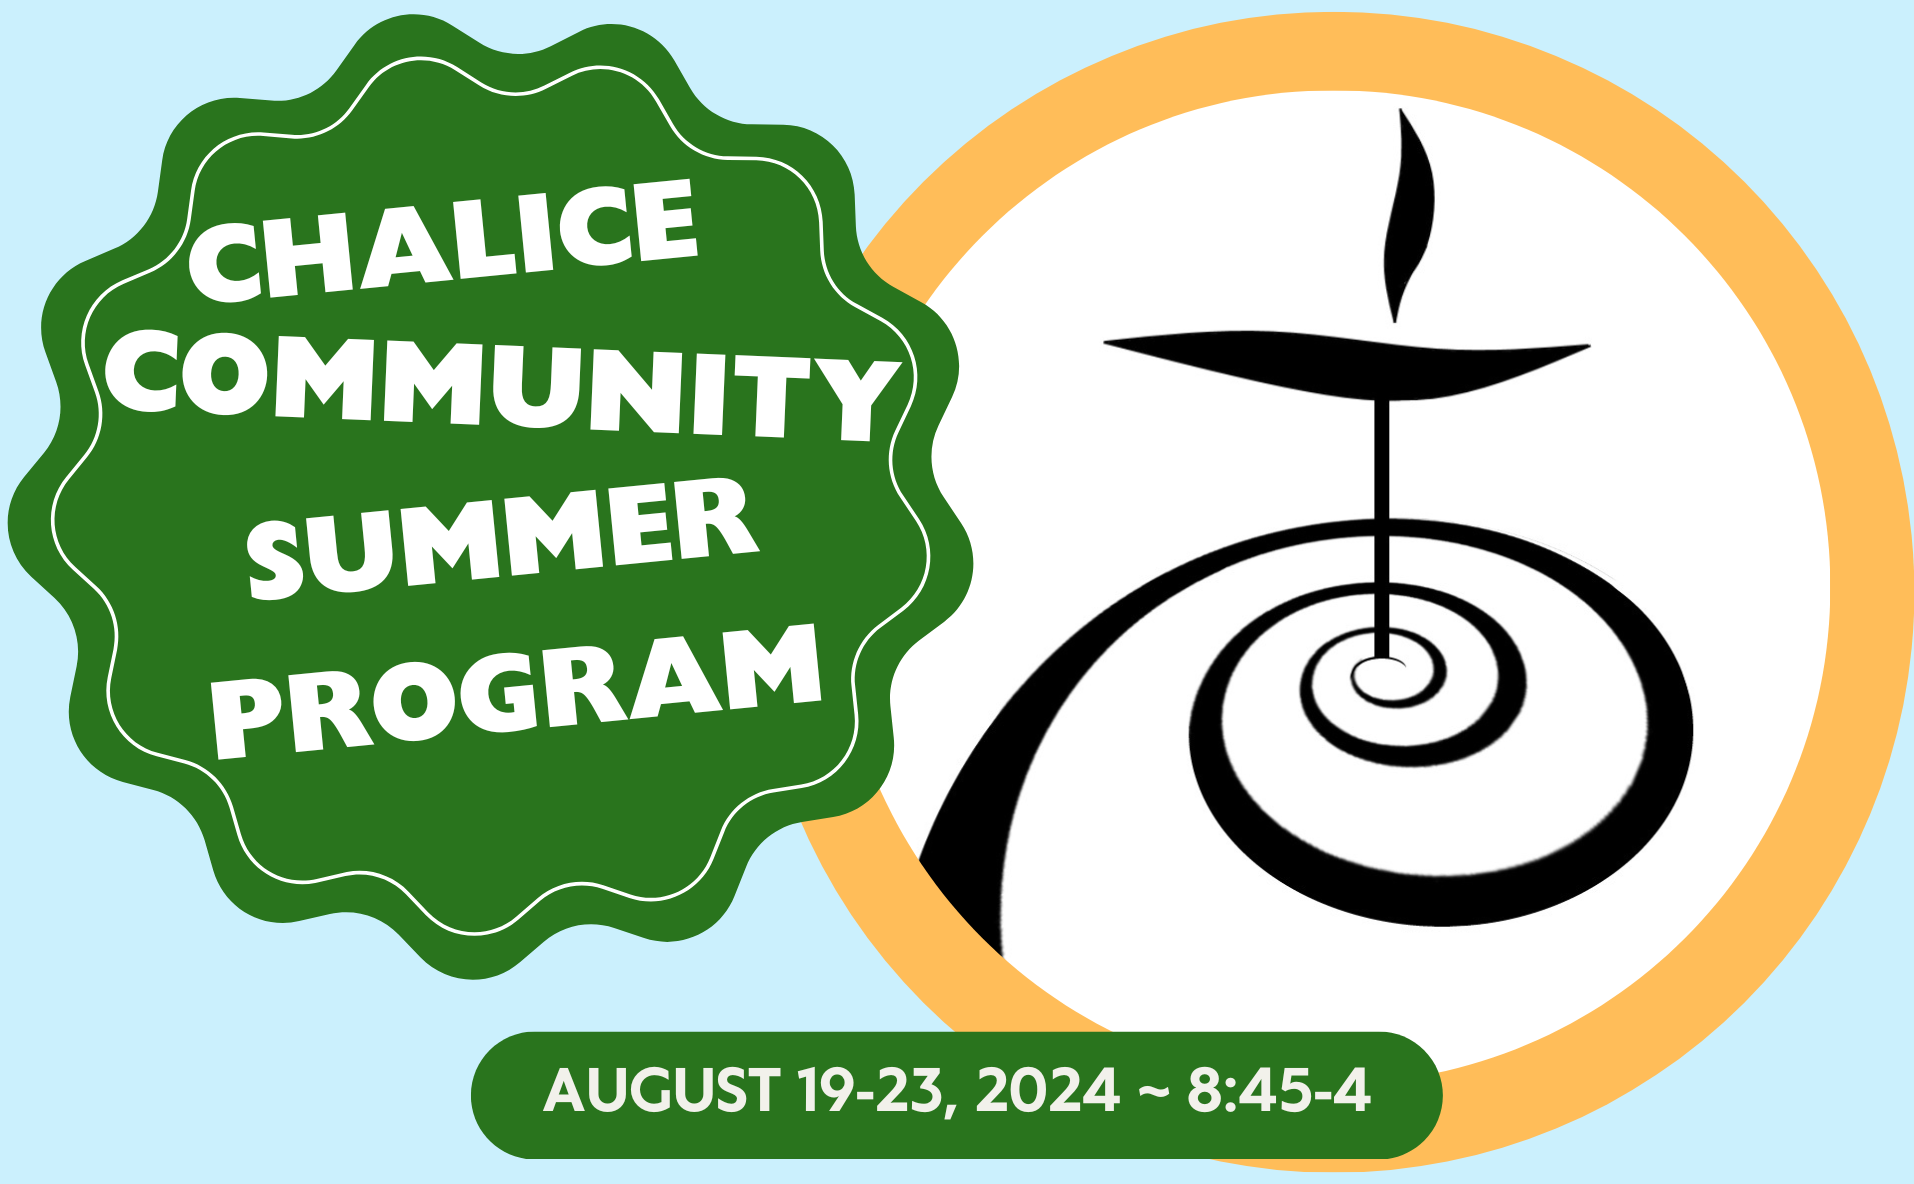 Chalice Community Summer Program - Register now!